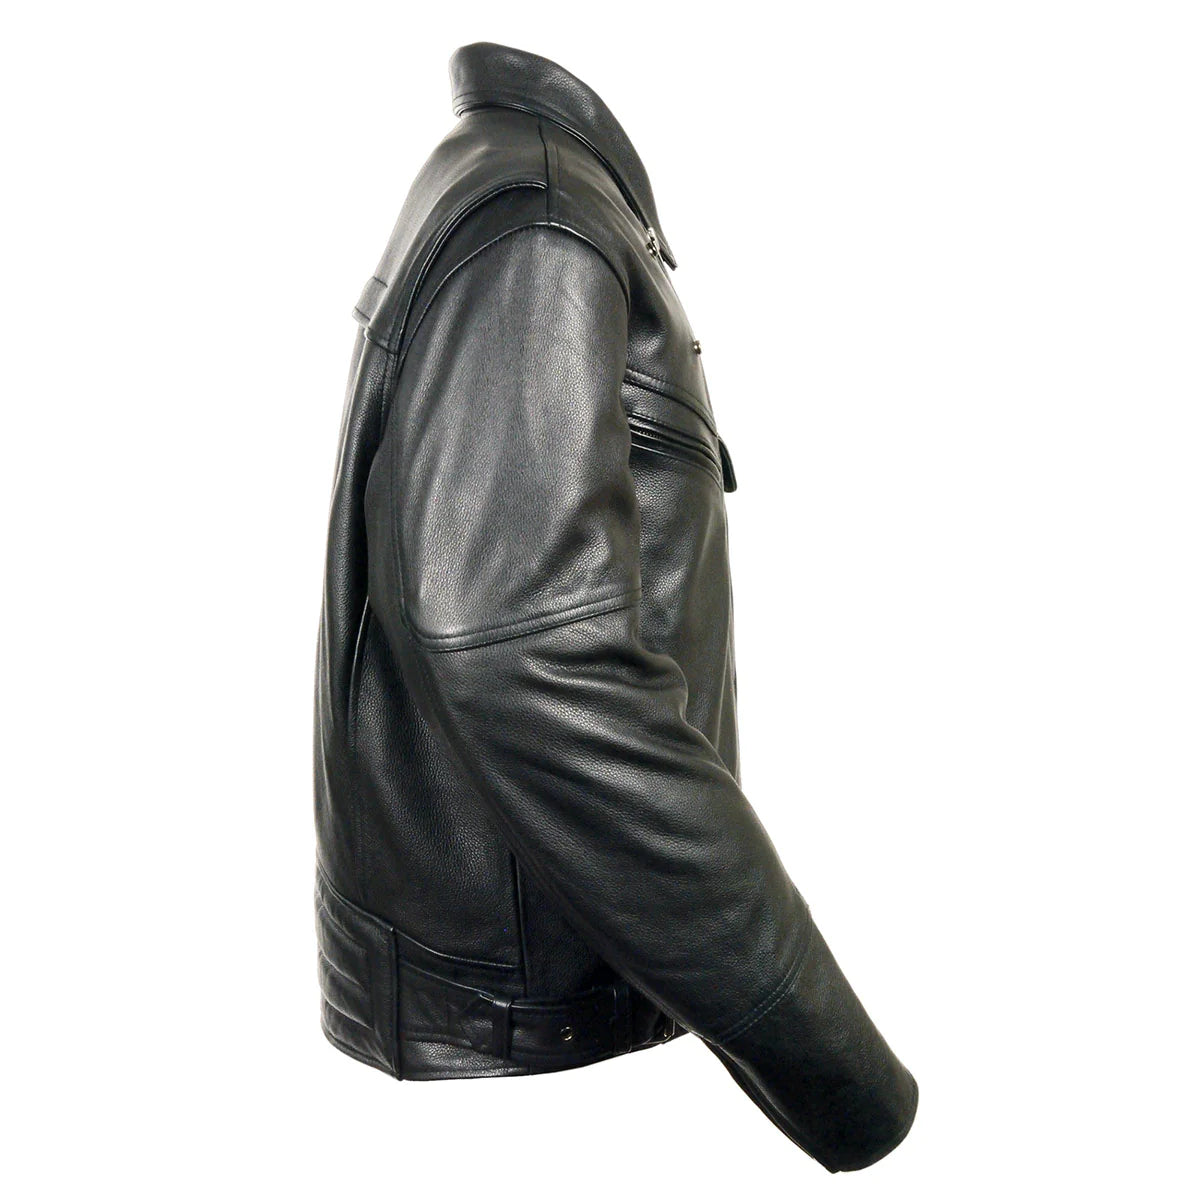 Black Genuine Leather Motorcycle Jacket for Men, 1.3mm Thick Police Style Biker Jacket